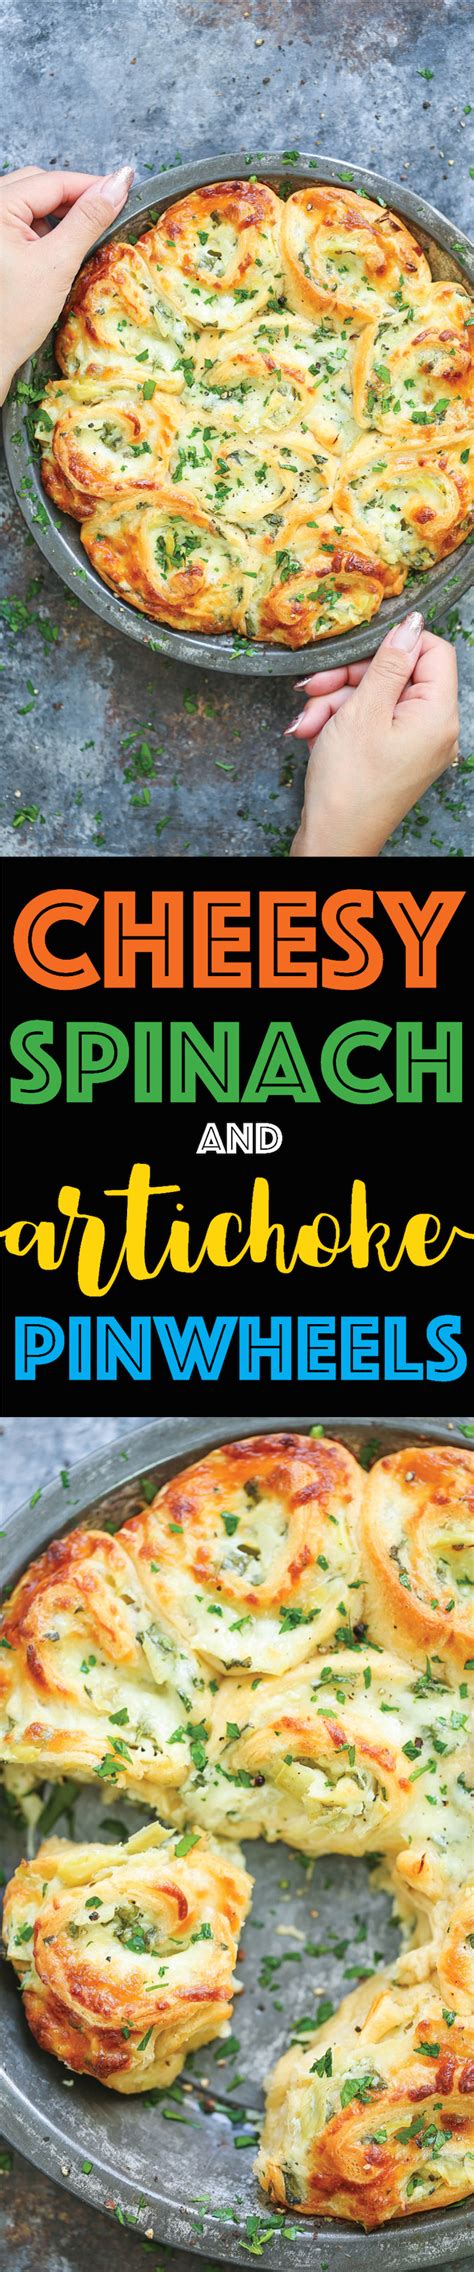 cheesy-spinach-and-artichoke-pinwheels-damn image